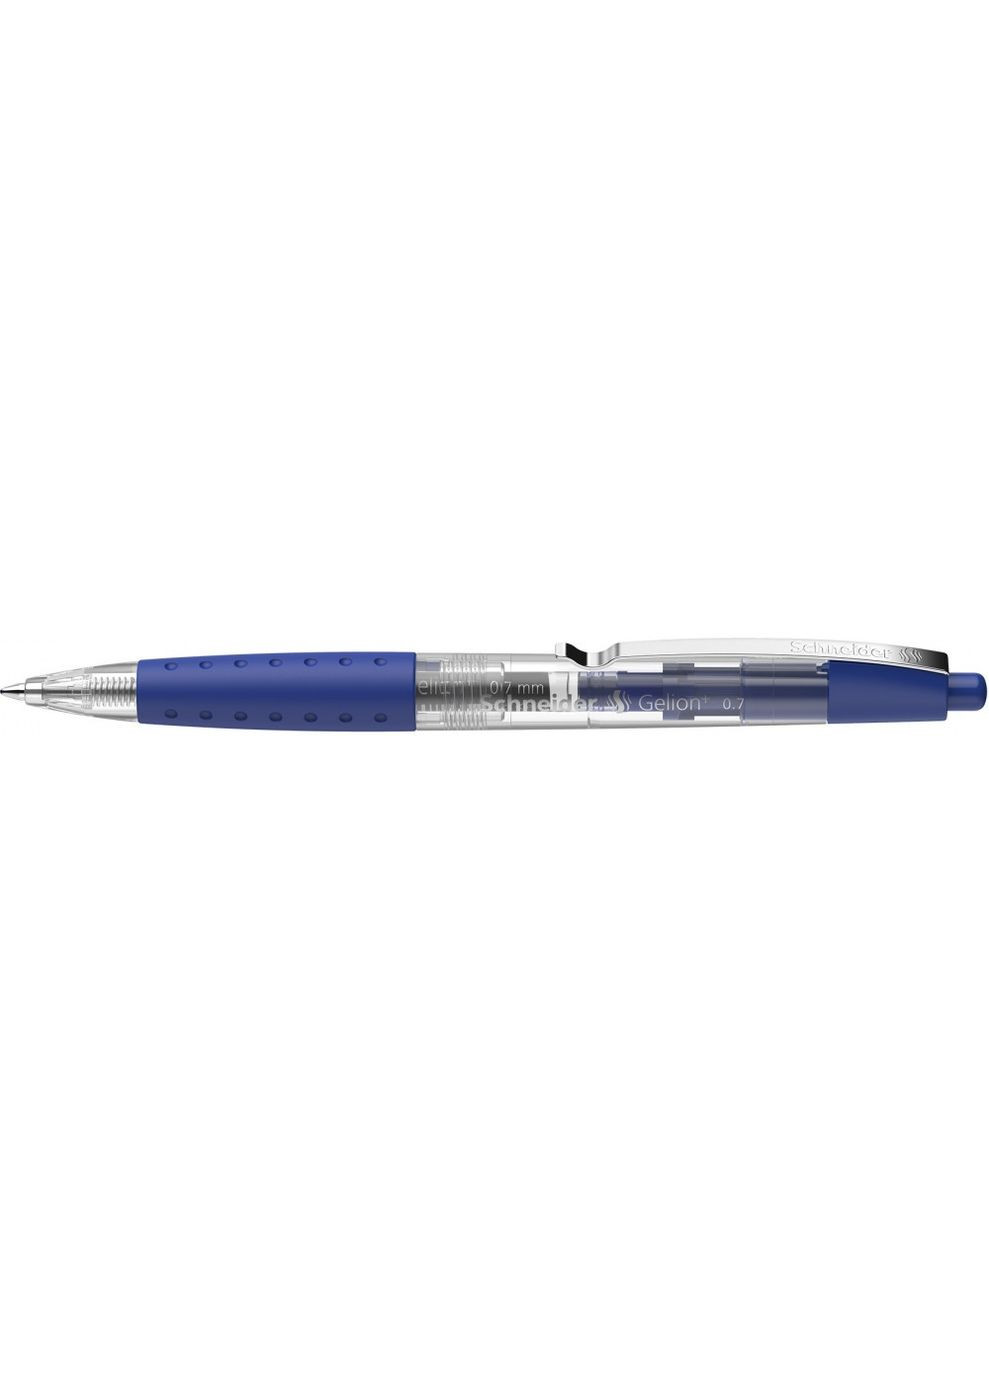 Ручка гелева автоматична синя 0.7 мм, Gelion+ Schneider (280927829)